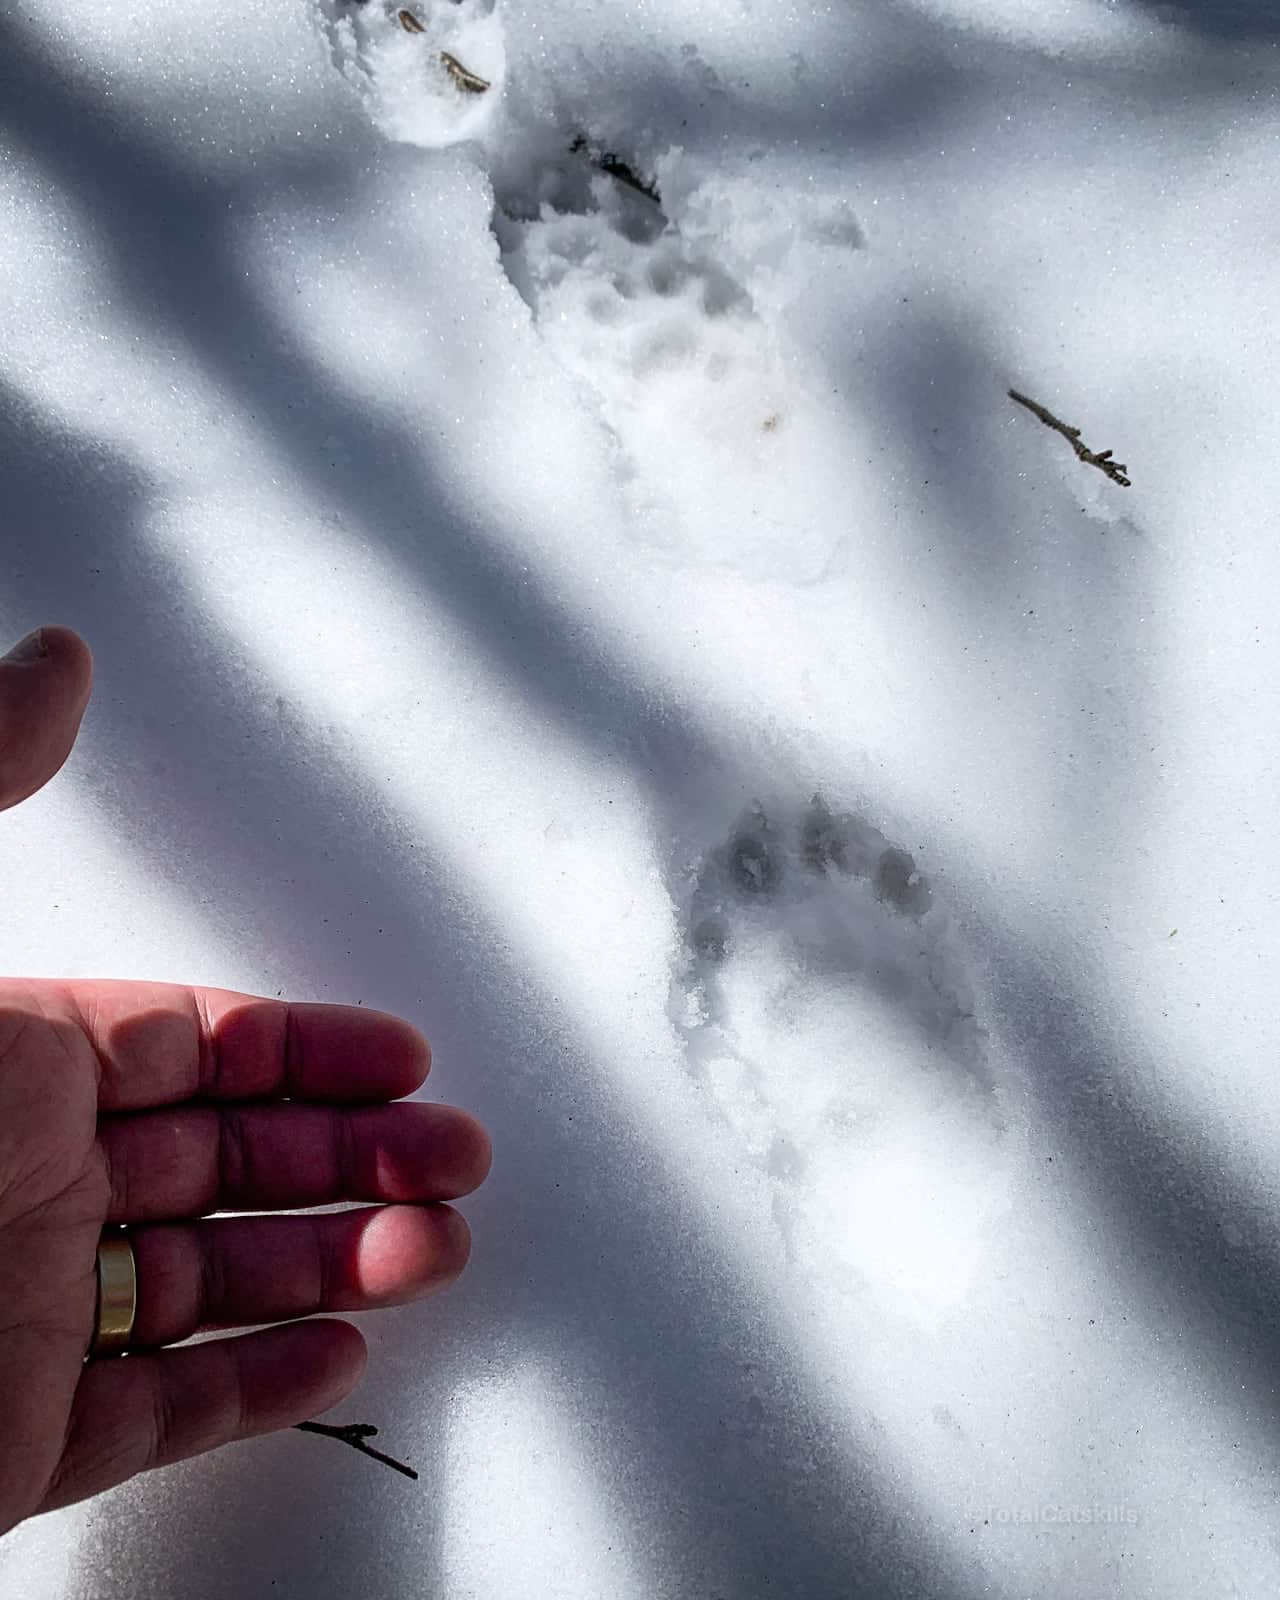 black bear cub prints in snow